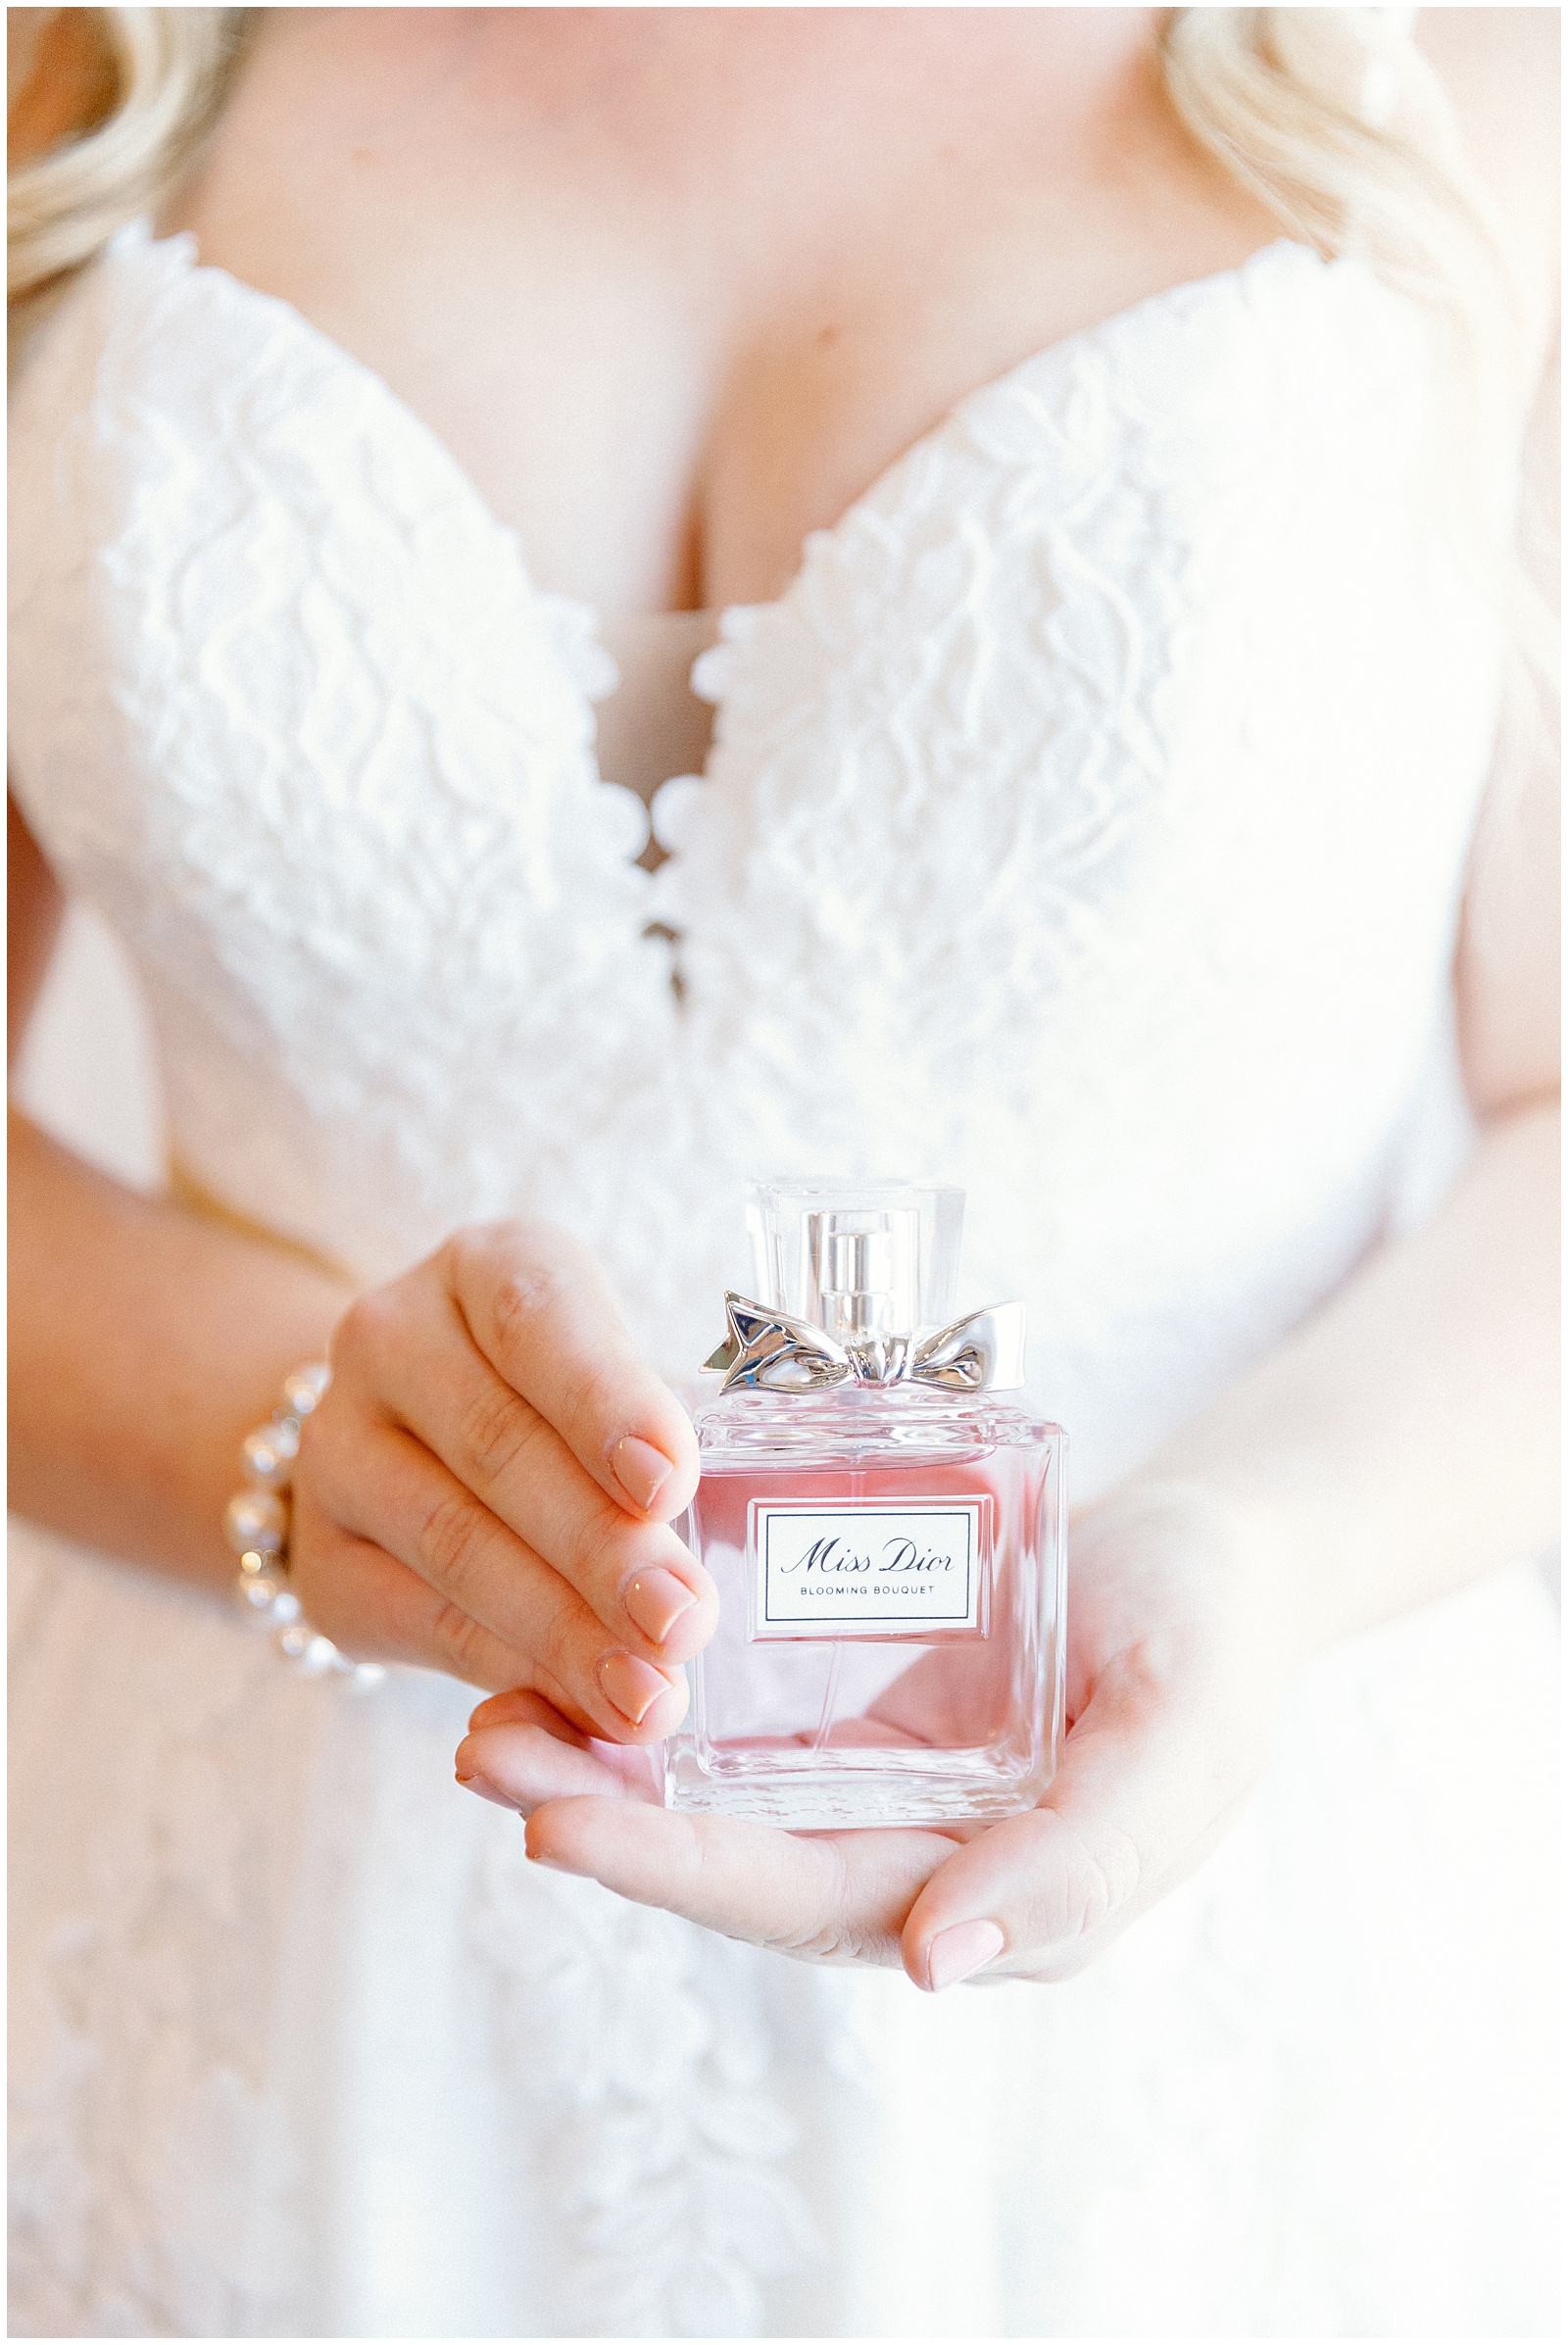 Perfume detail photo at romantic Still Water Hollow Wedding